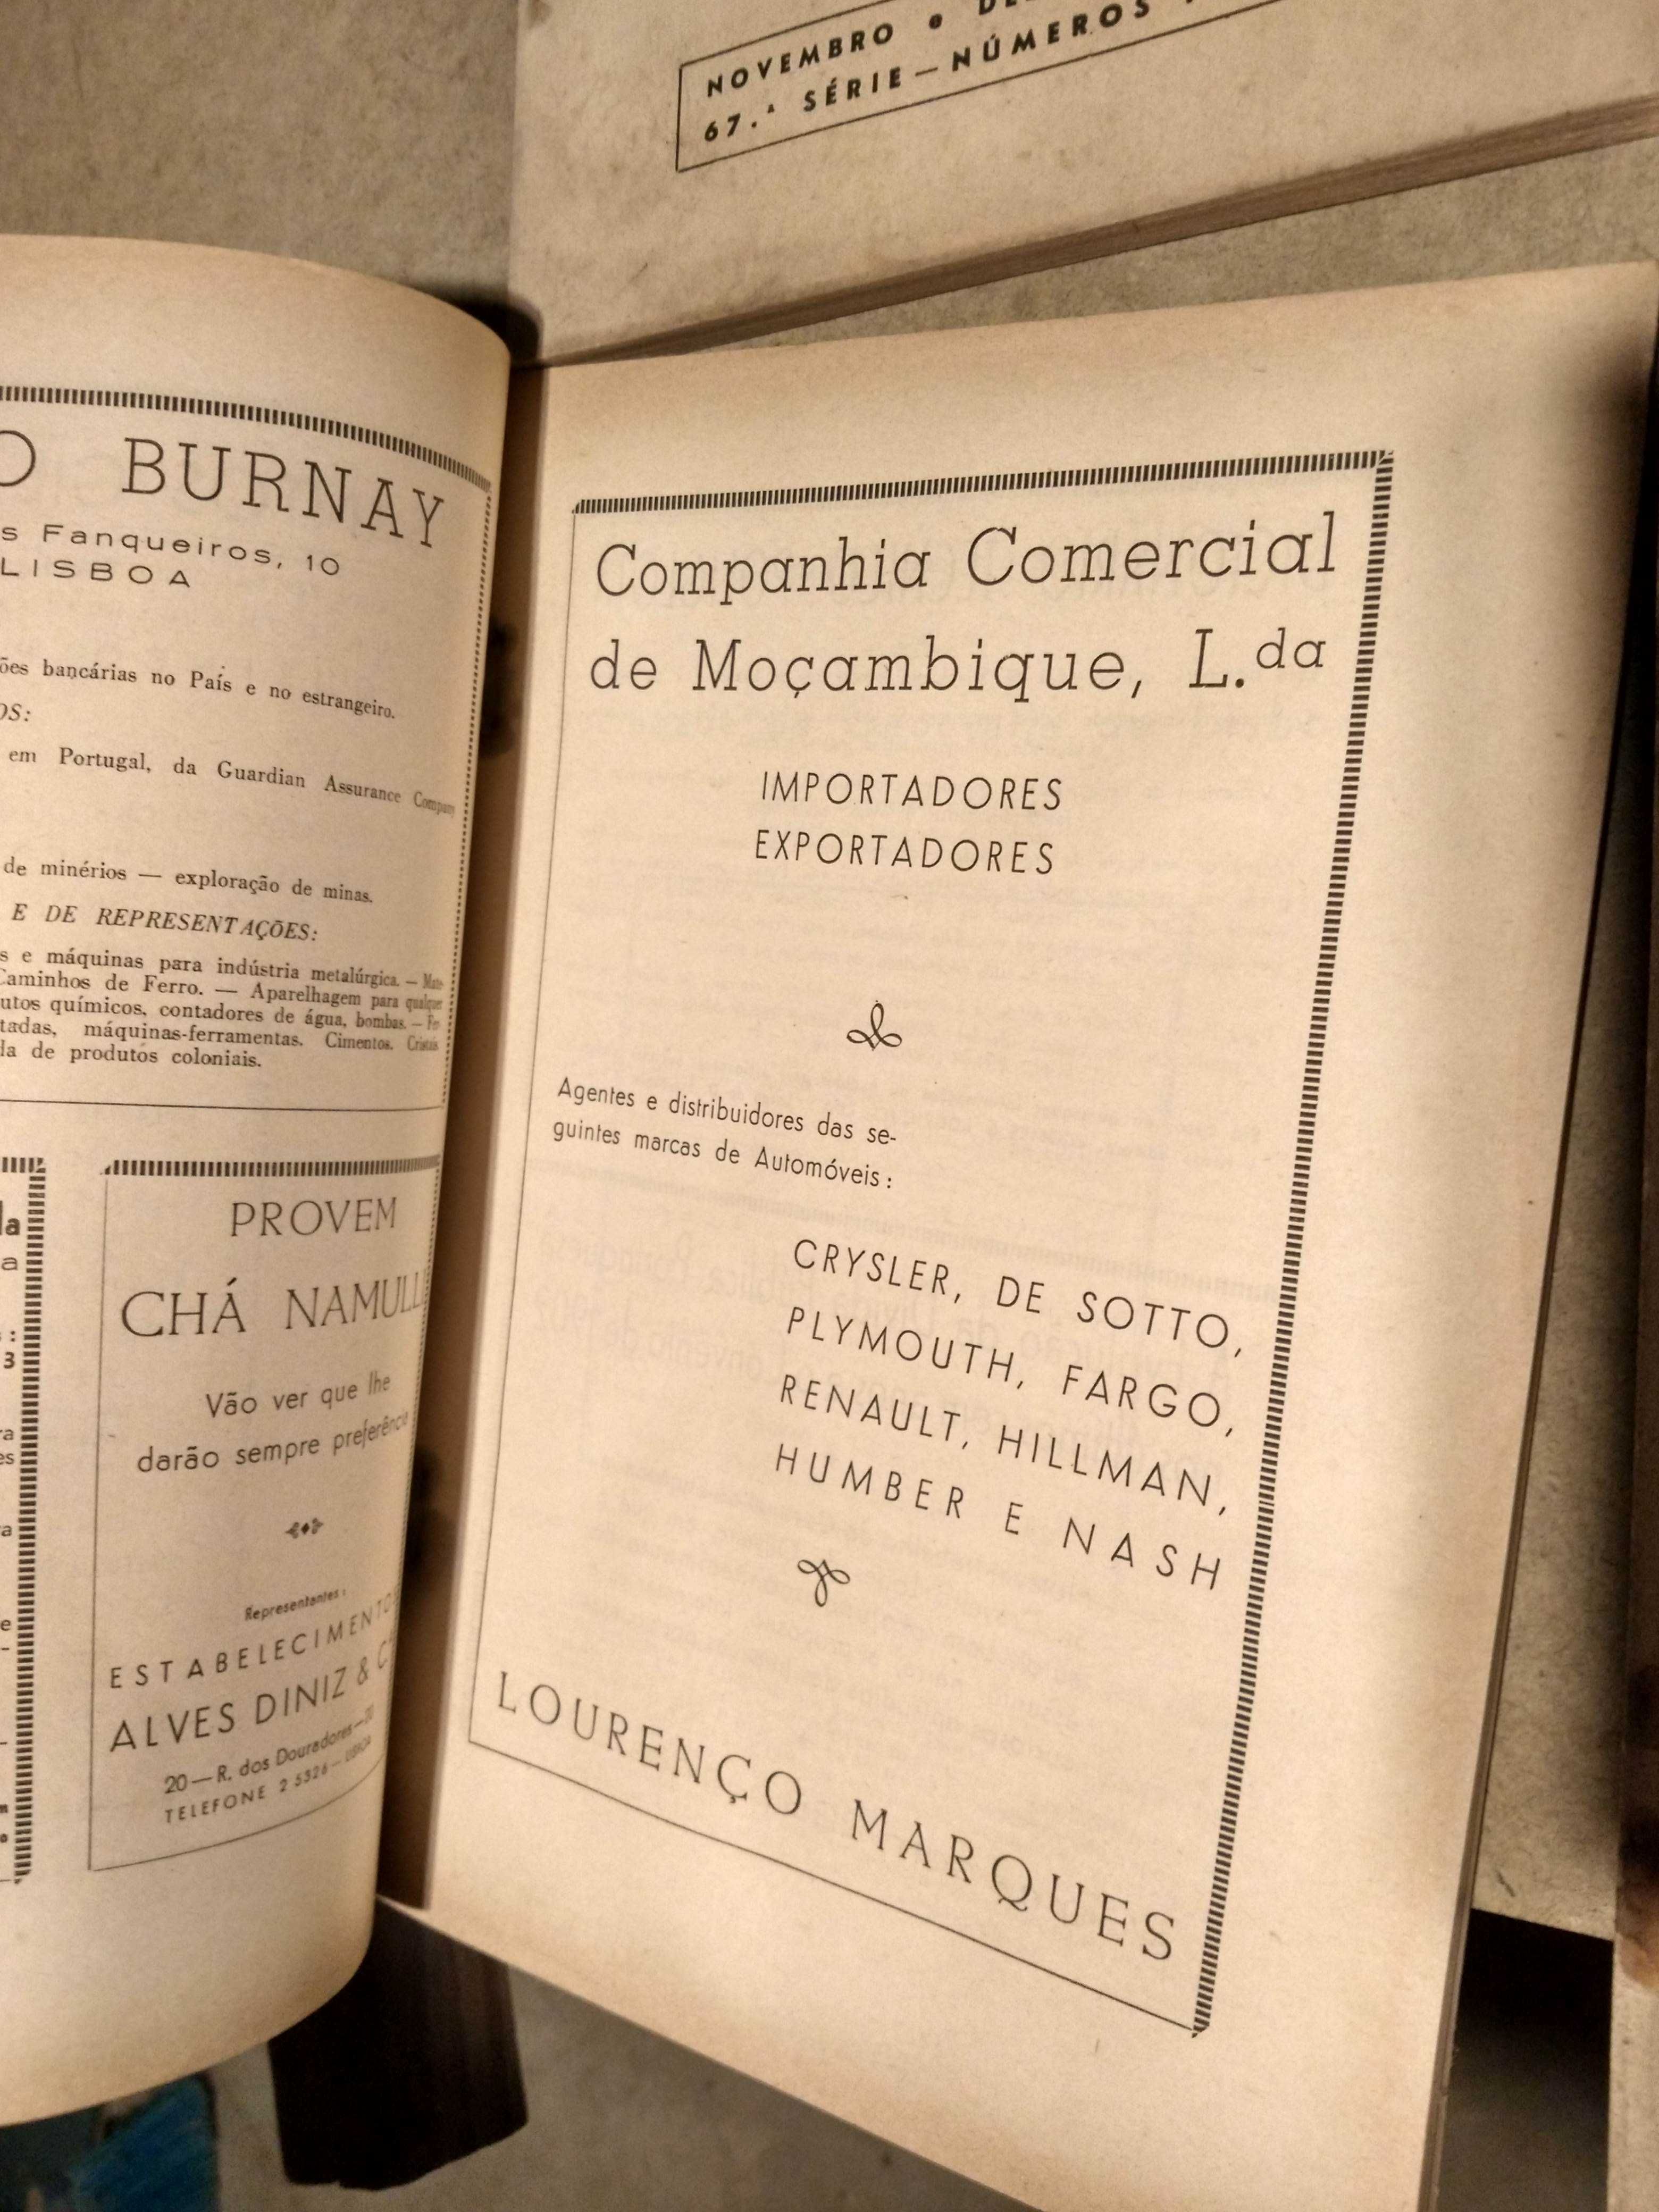 Ano completo de 1949 - fascículos da Sociedade de Geografia de Lisboa